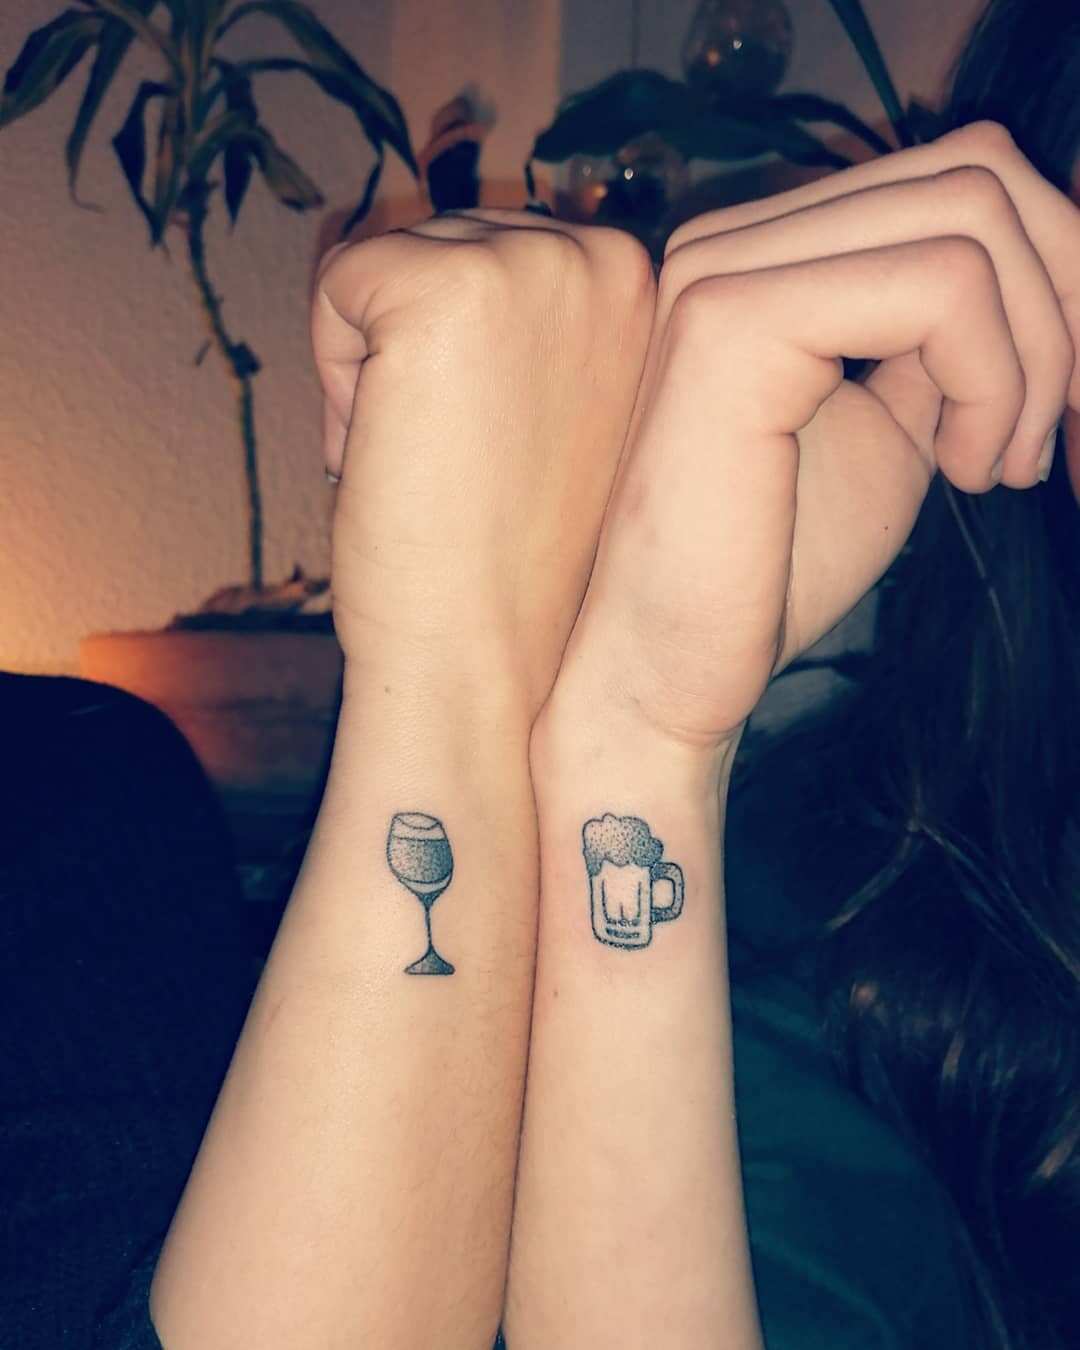 Best-Friend Tattoos | POPSUGAR Beauty